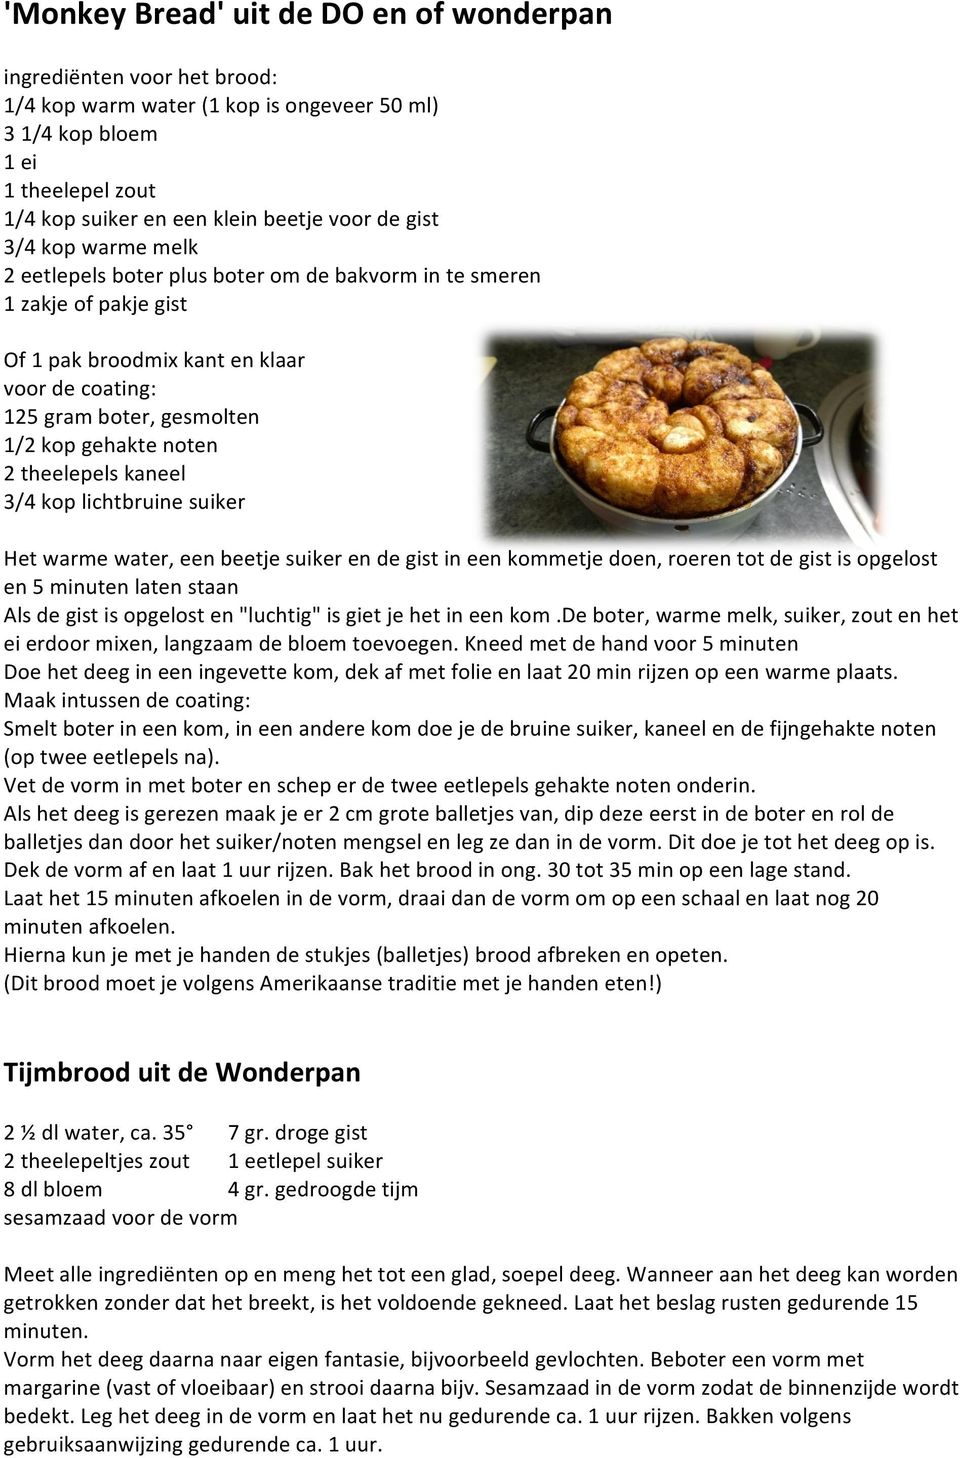 Verwonderend KOOKBOEKJE. Workshop koken en bakken in de DO en Wonderpan - PDF BL-73